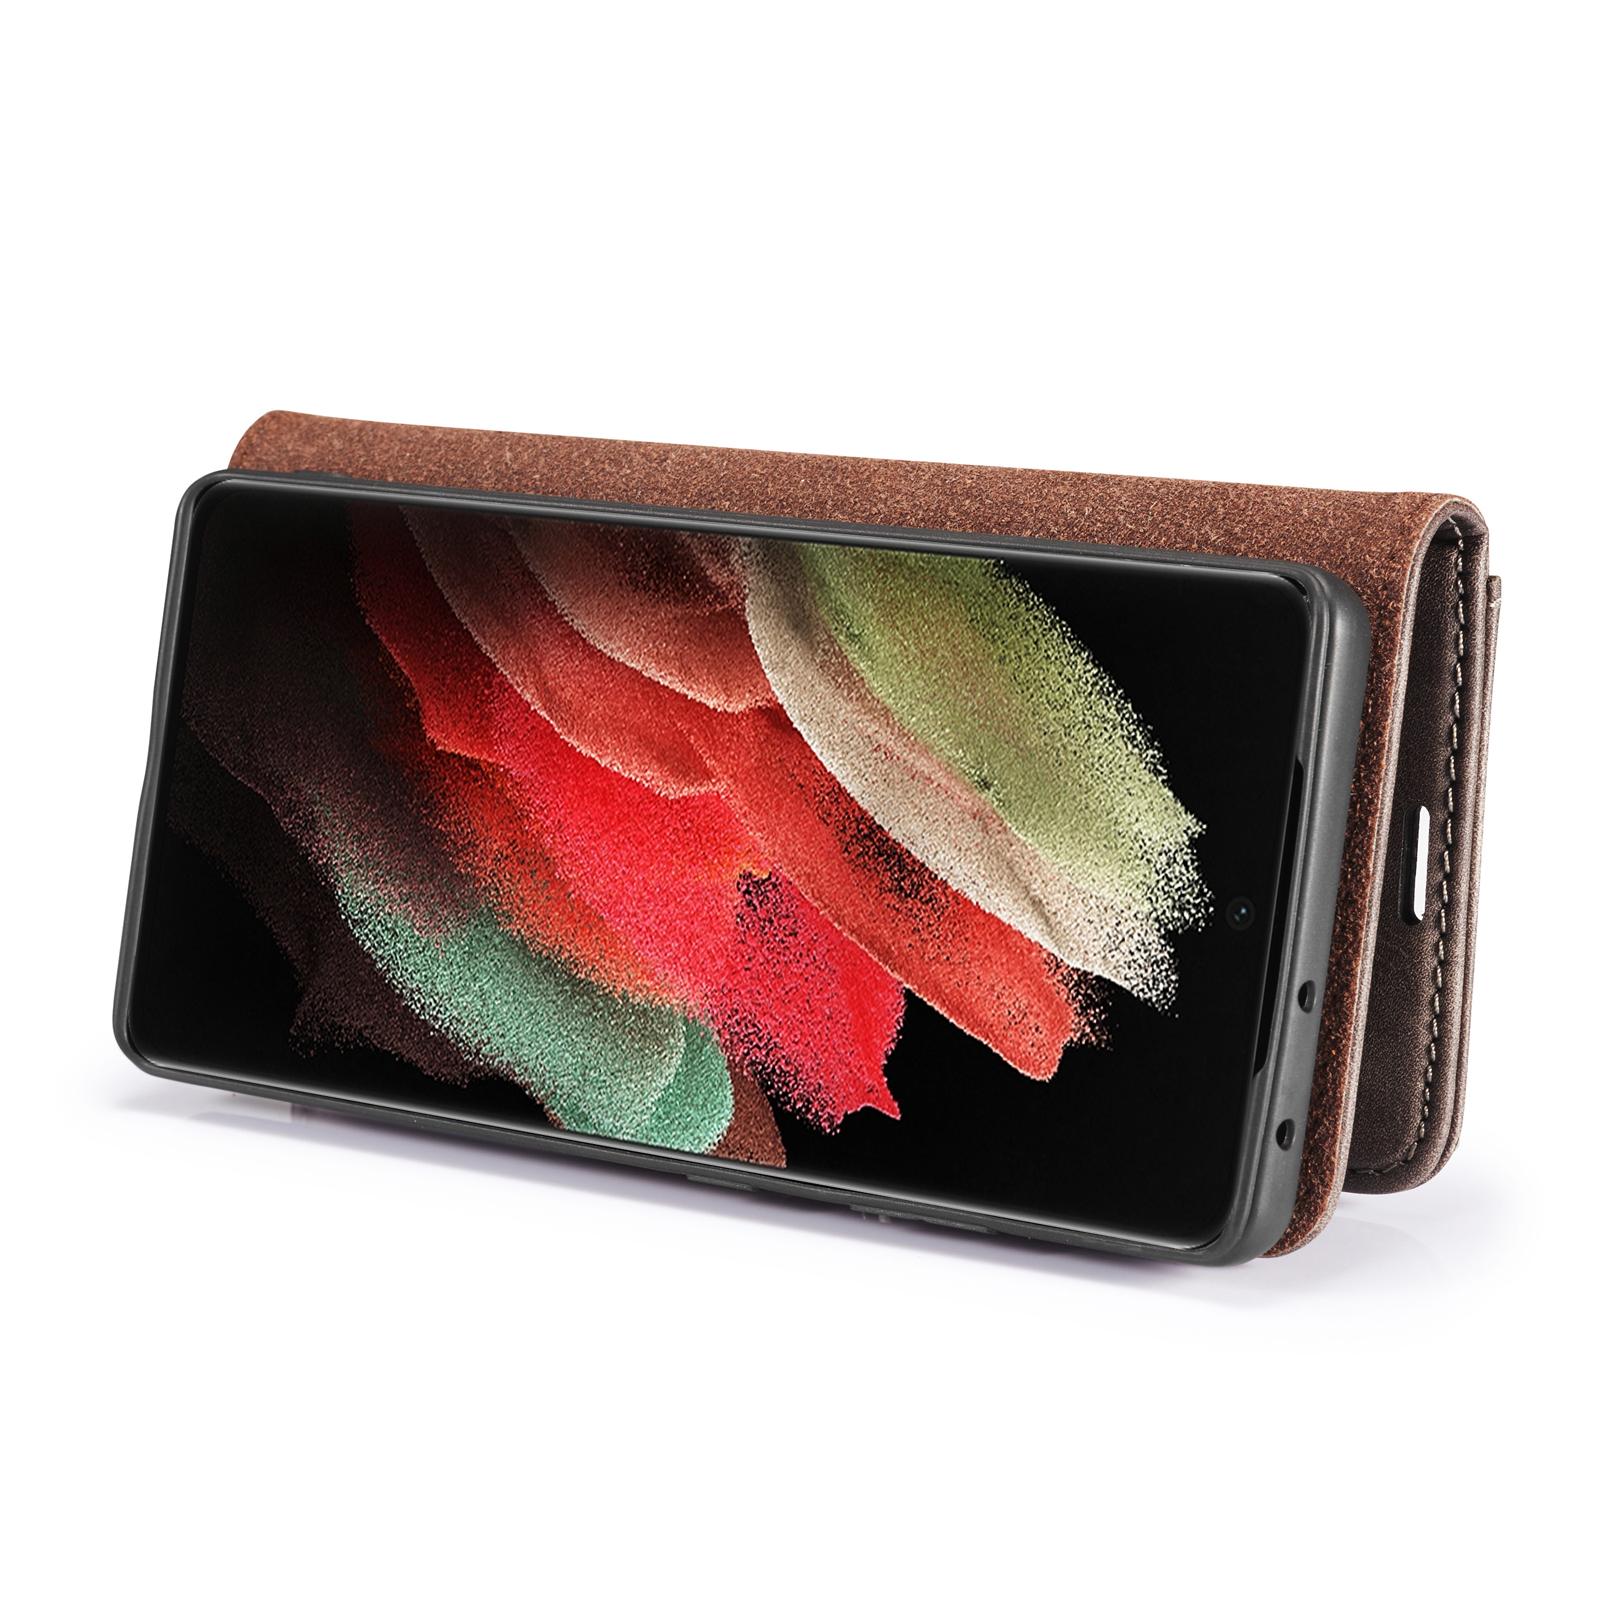 Étui portefeuille Magnet Wallet Samsung Galaxy S21 Ultra Brown